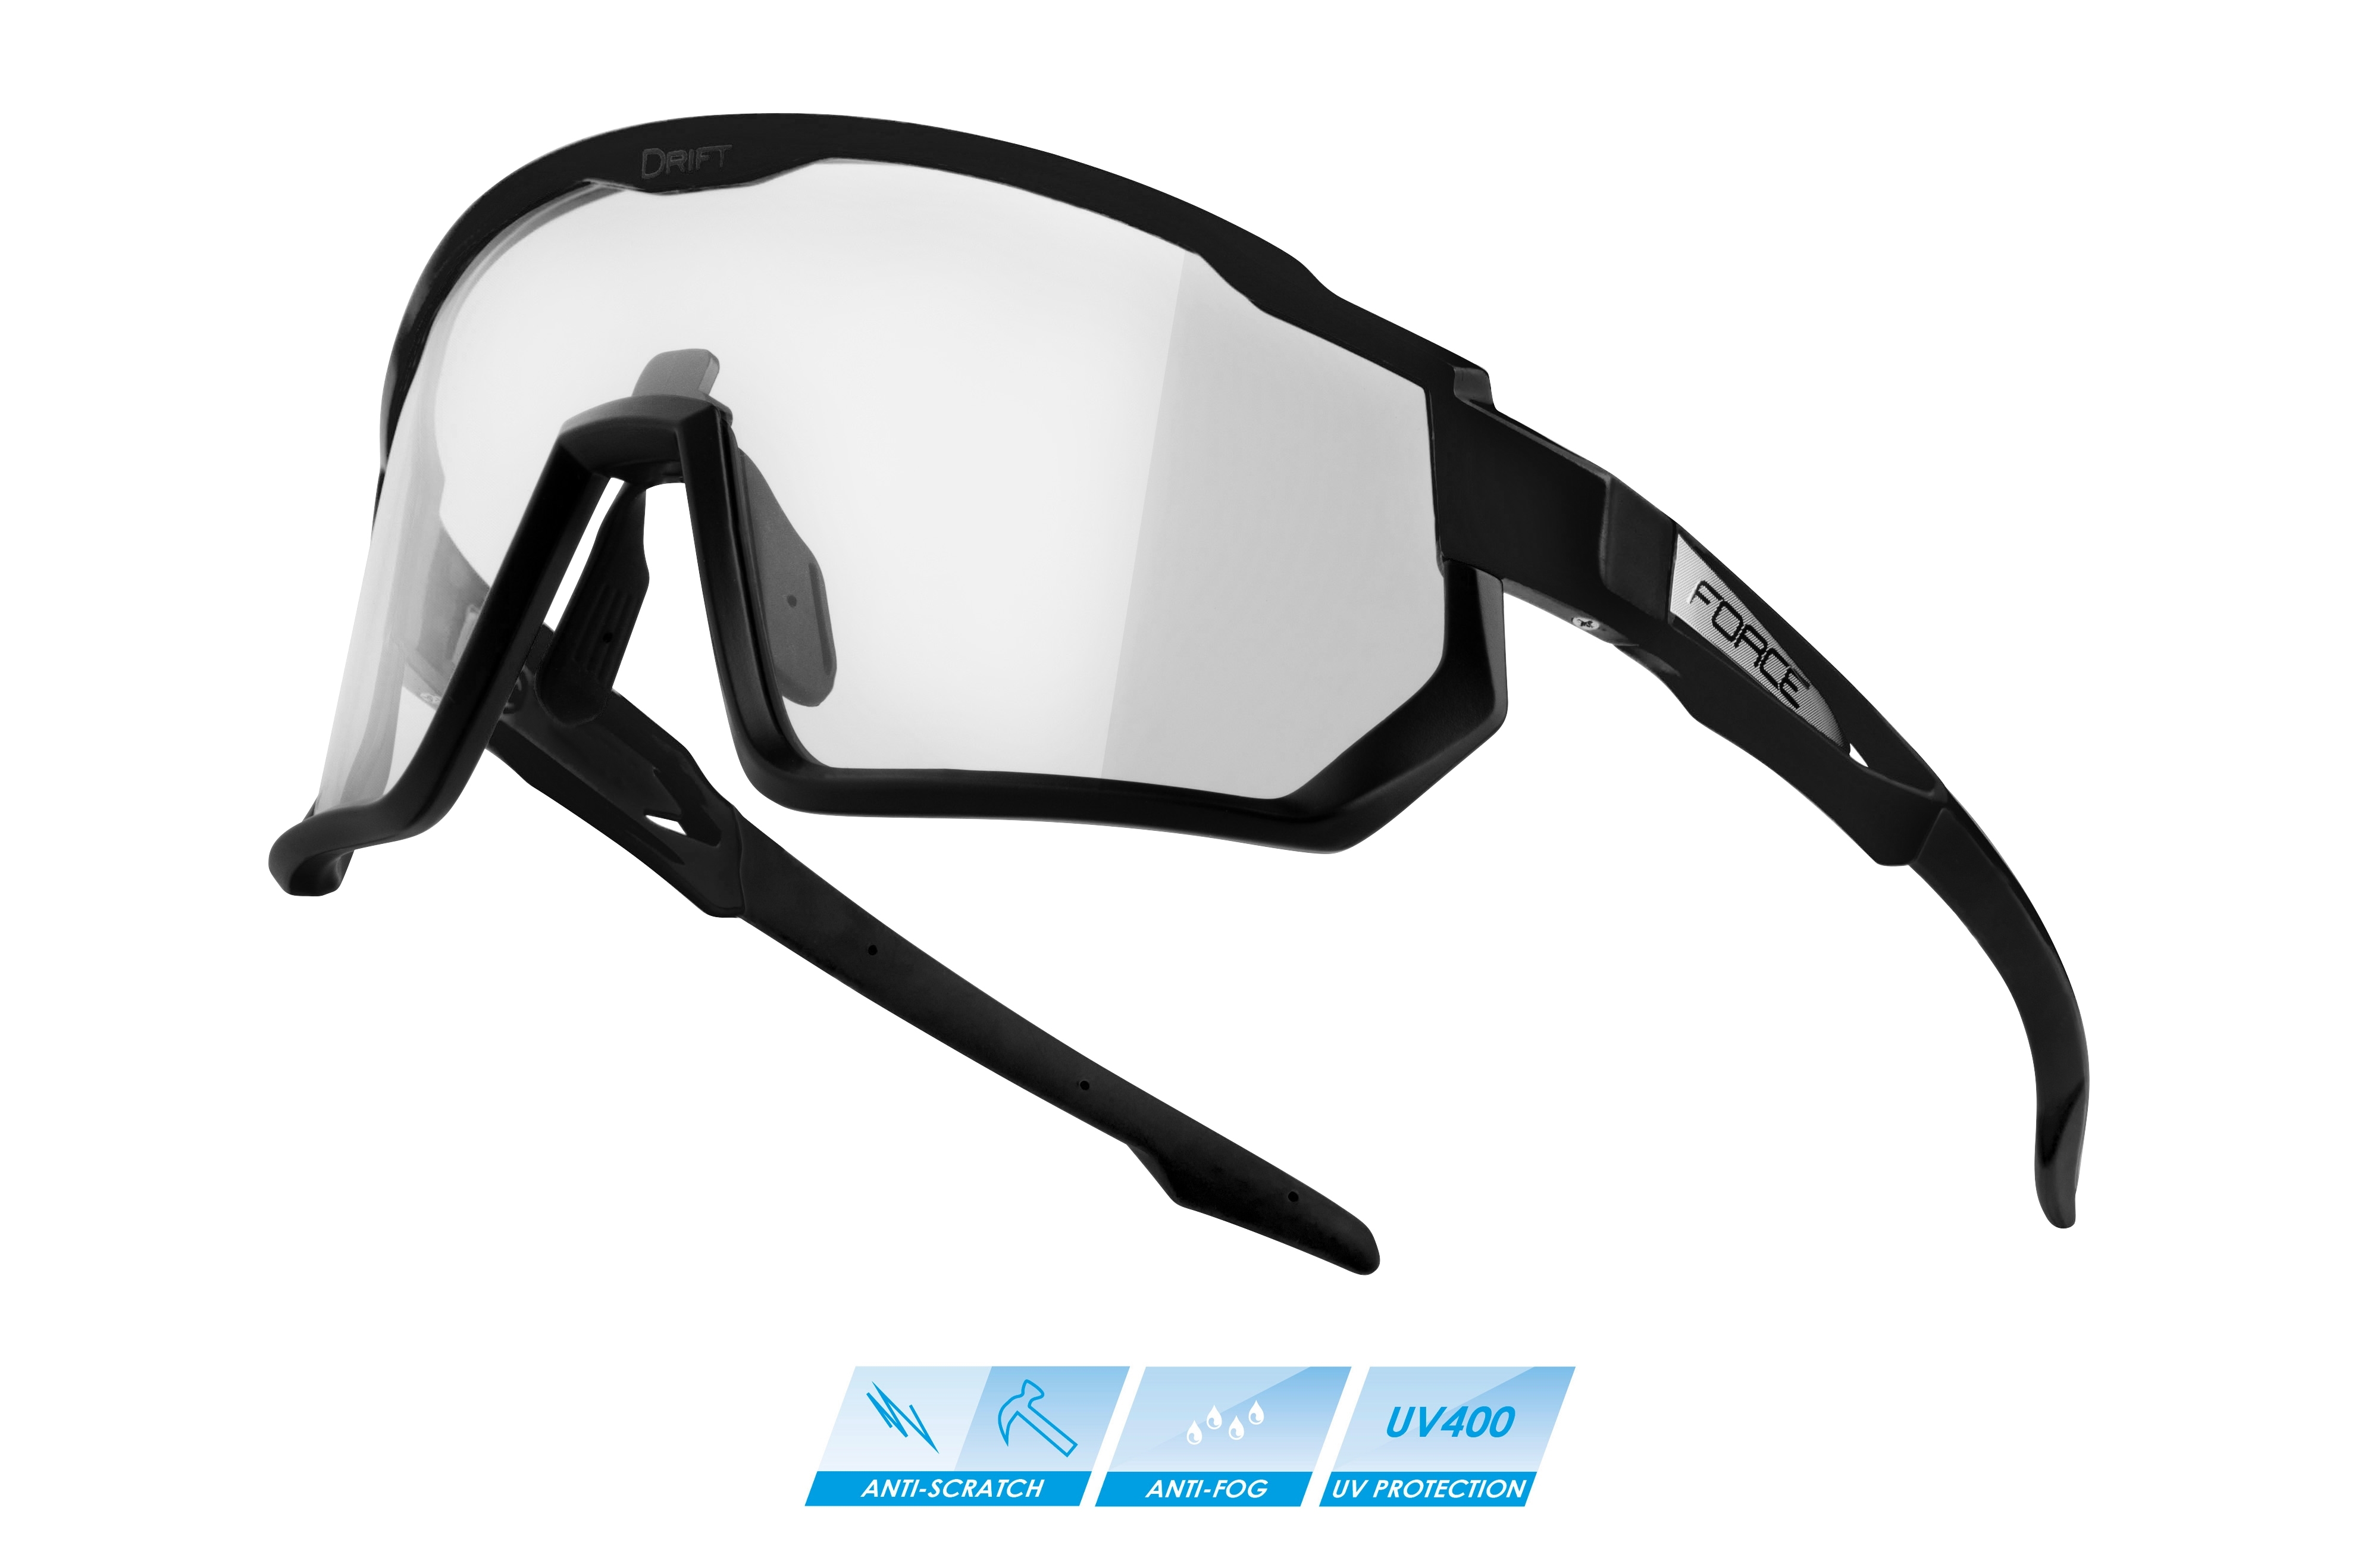 brýle FORCE DRIFT černé, fotochrom+černé sklo SADA Barva: Černá, určení: cyklistické, skla: fotochromatická